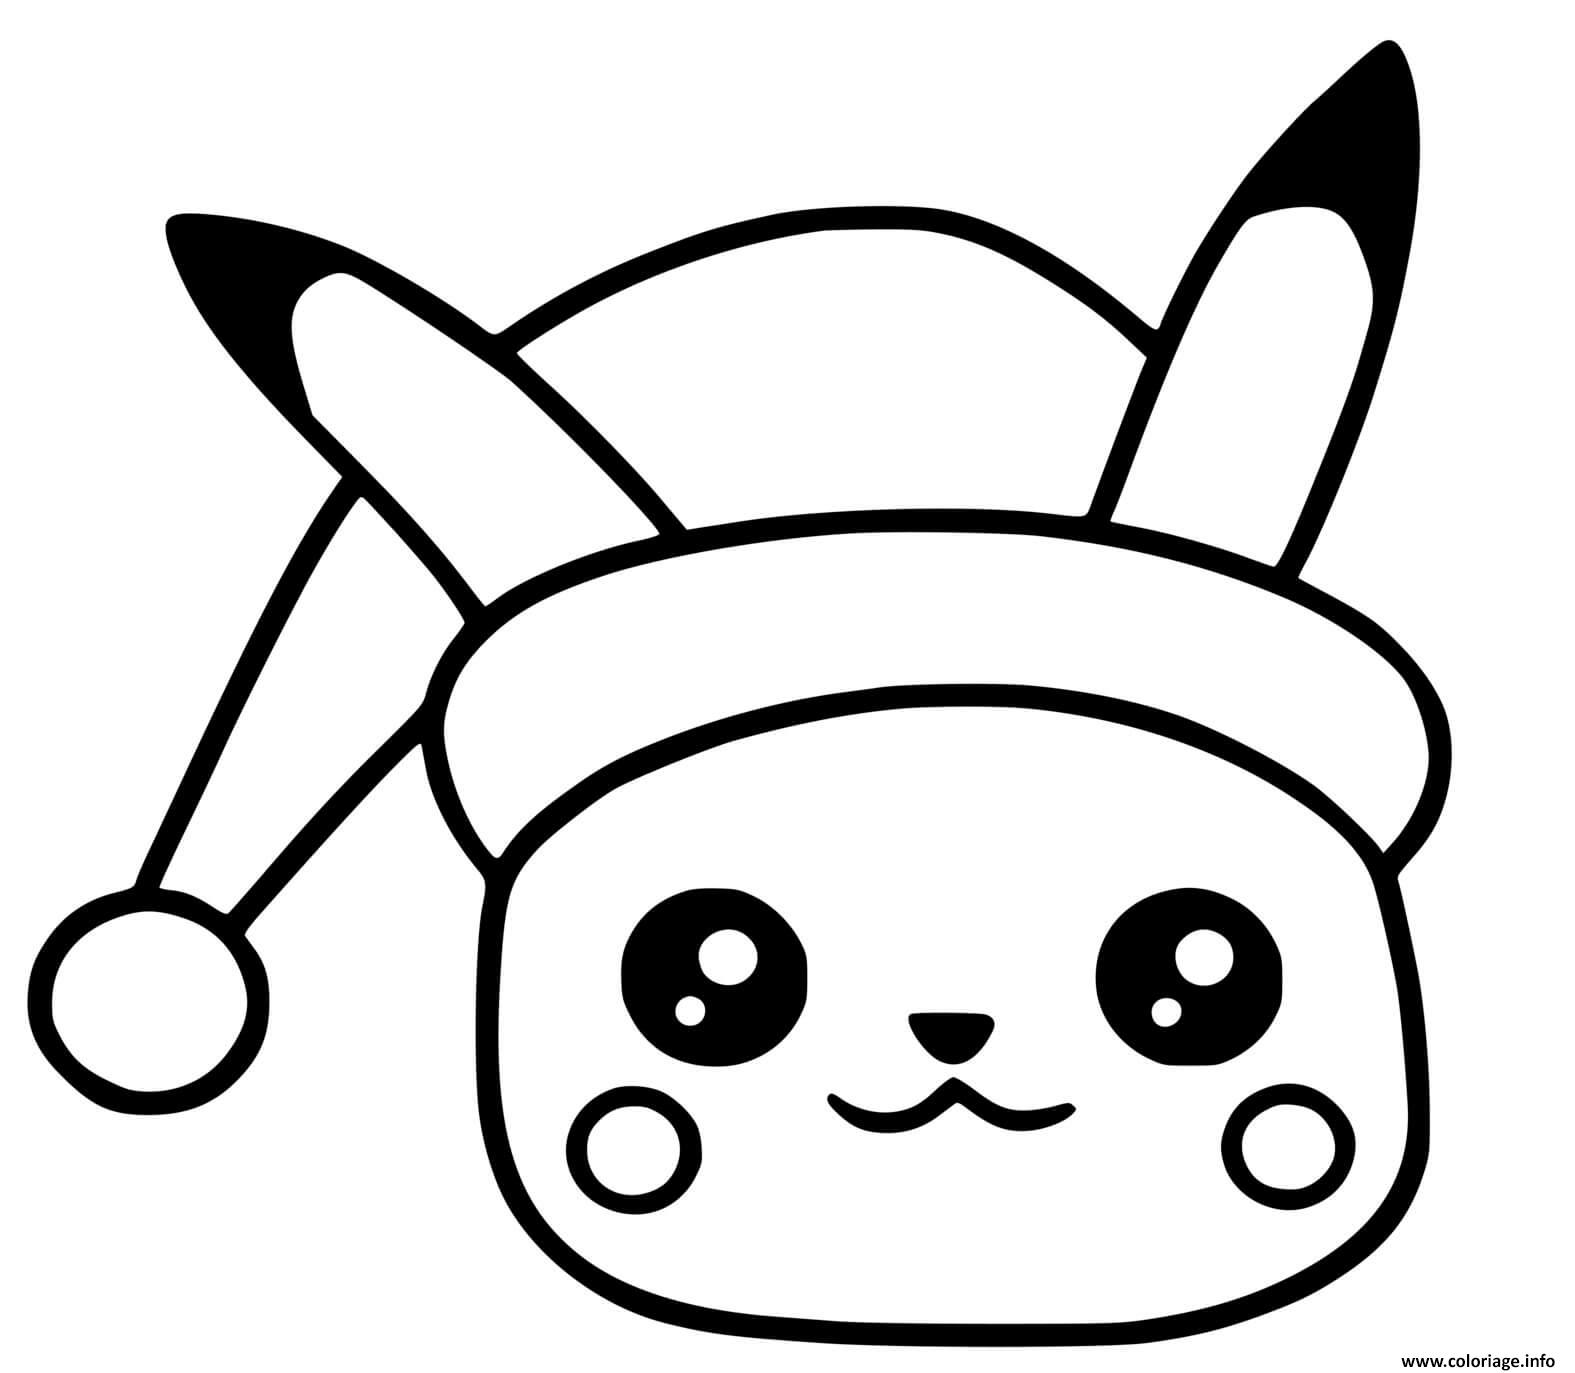 Dessin pikachu noel kawaii Coloriage Gratuit à Imprimer